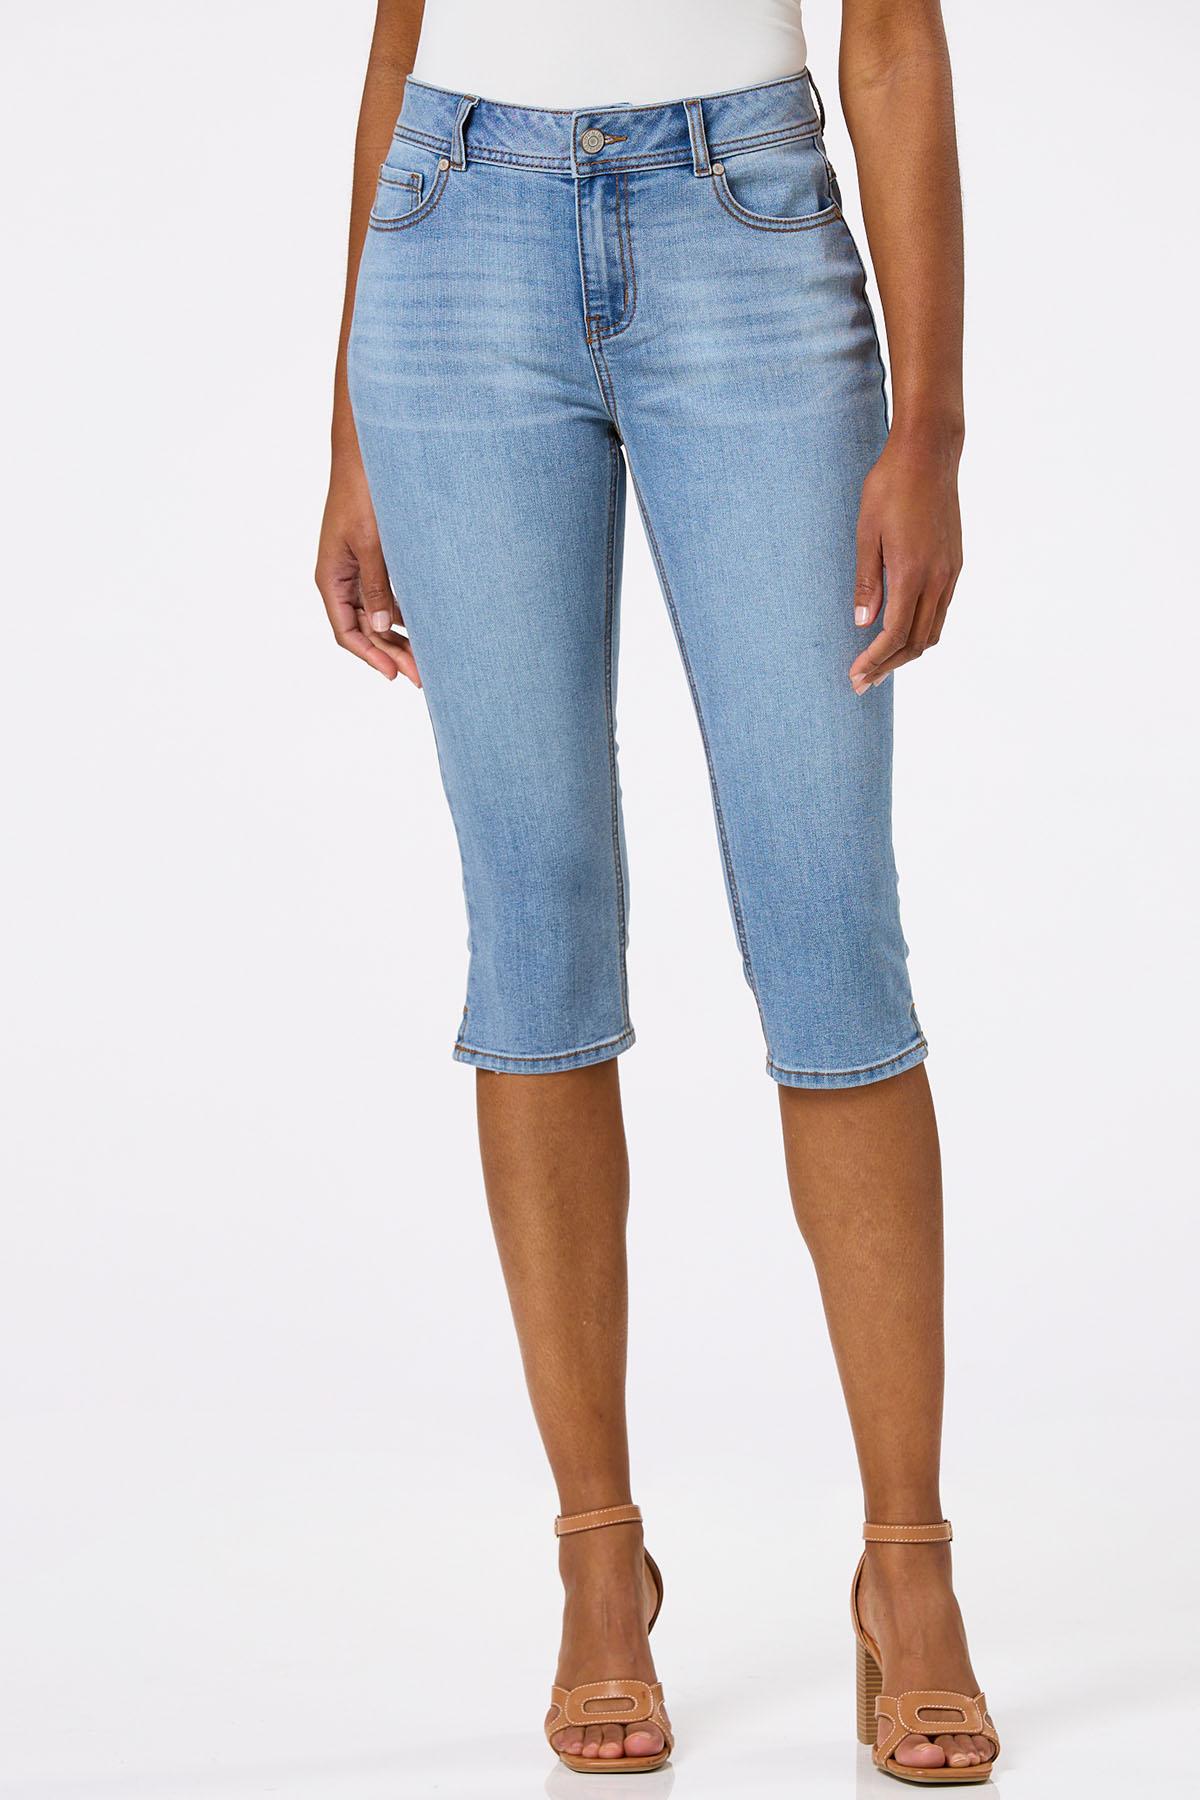 Cato Fashions  Cato Cropped Slit Hem Skinny Jeans